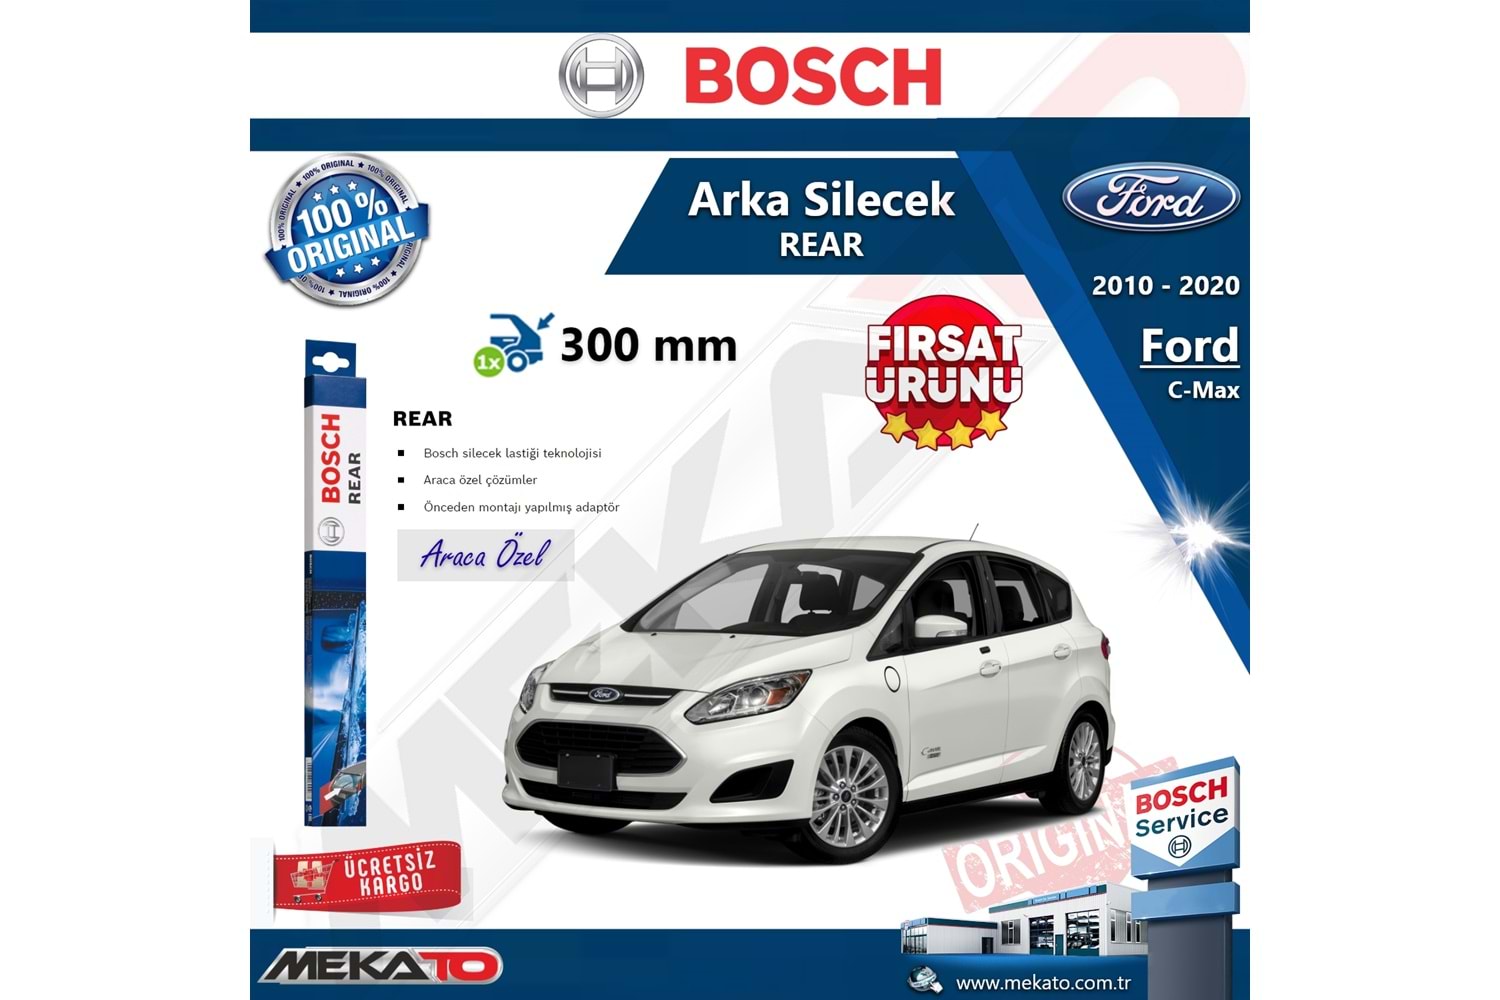 Ford C-Max Arka Silecek Bosch Rear 2015-2020